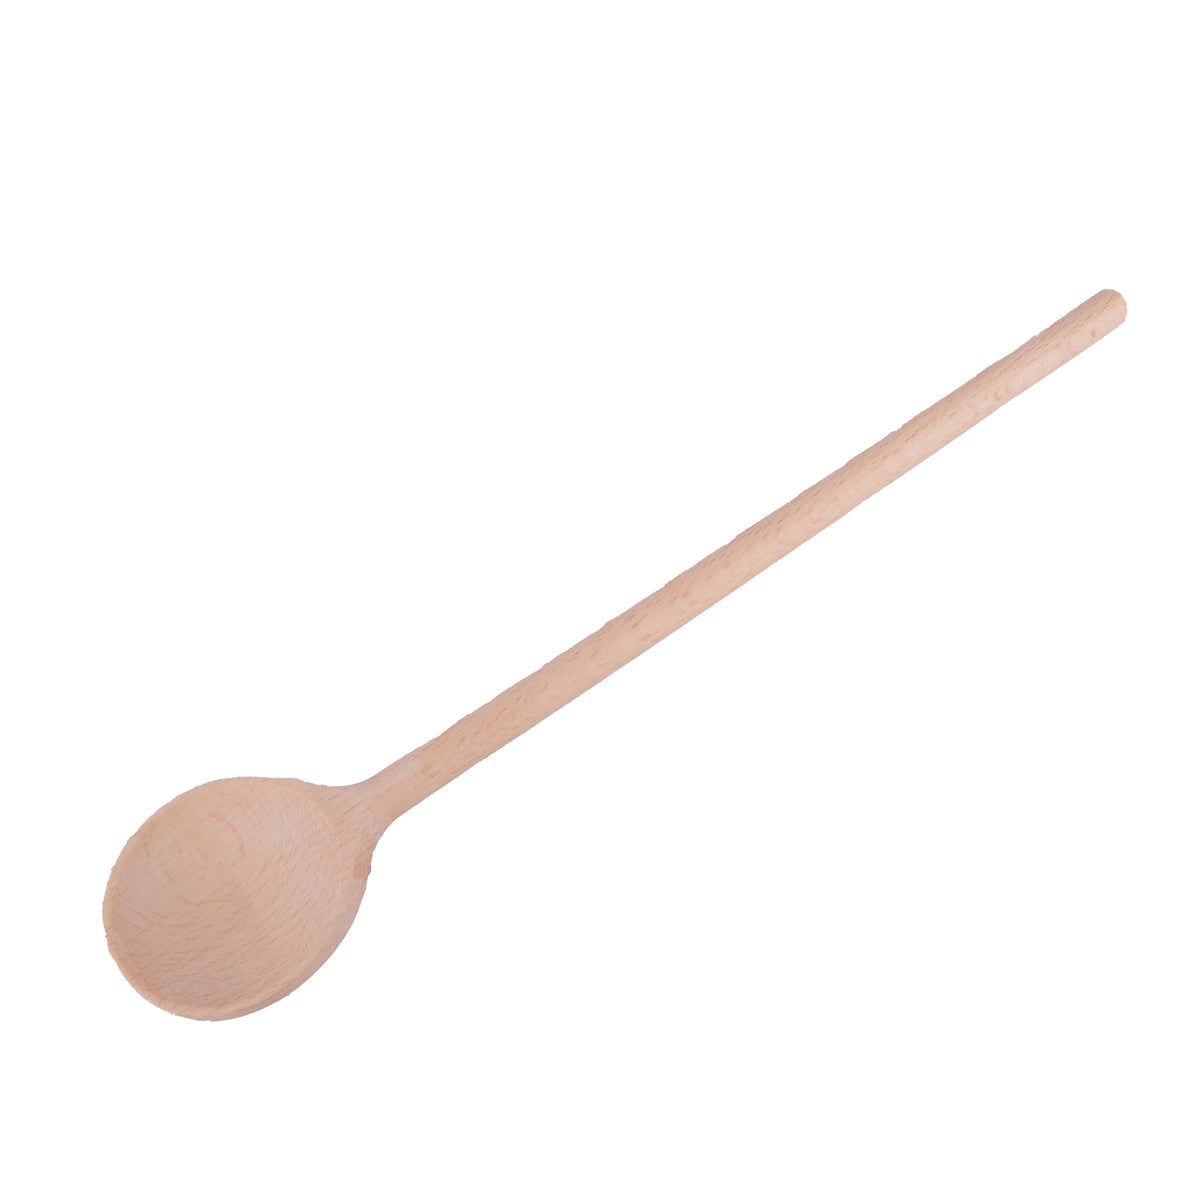 Wooden serving spoon, NaturalSize: 40 cm